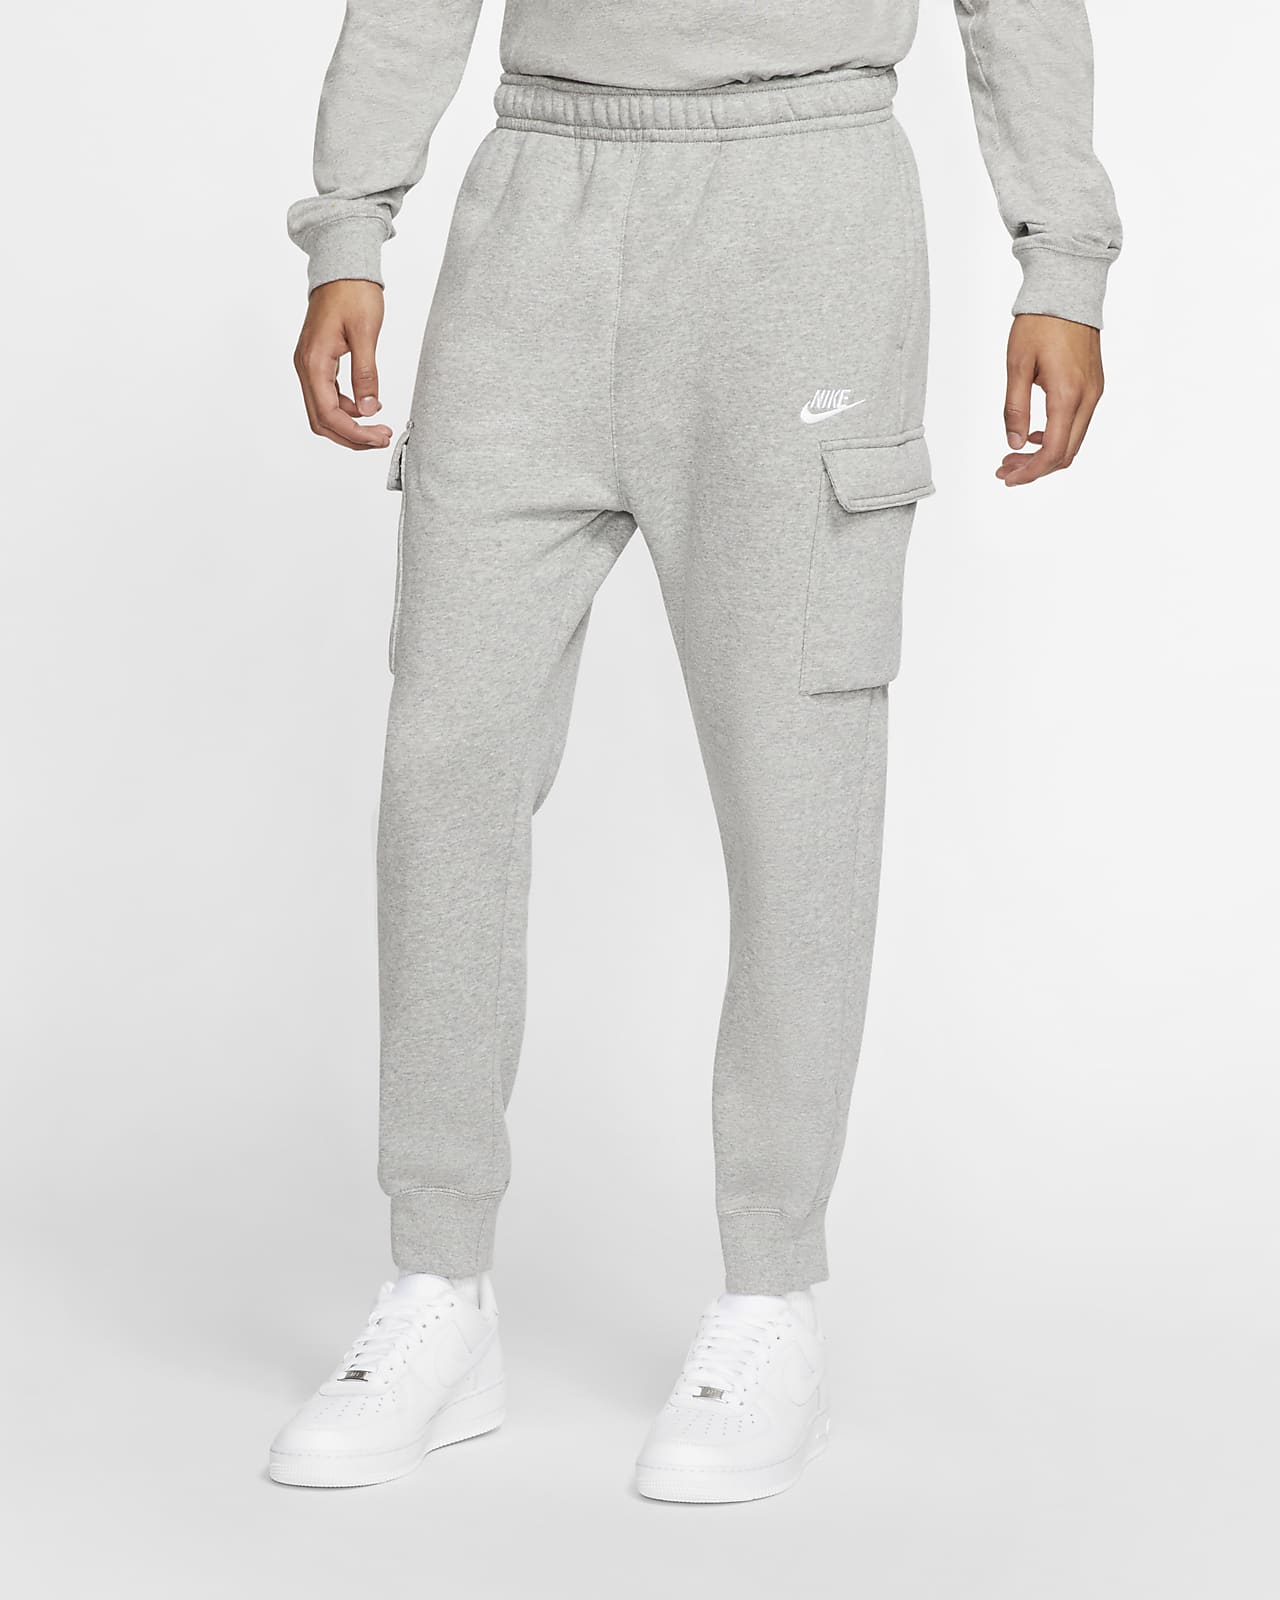 Conjunto Nike Sportswear para Homens. Sweatshirt + Calças de corrida